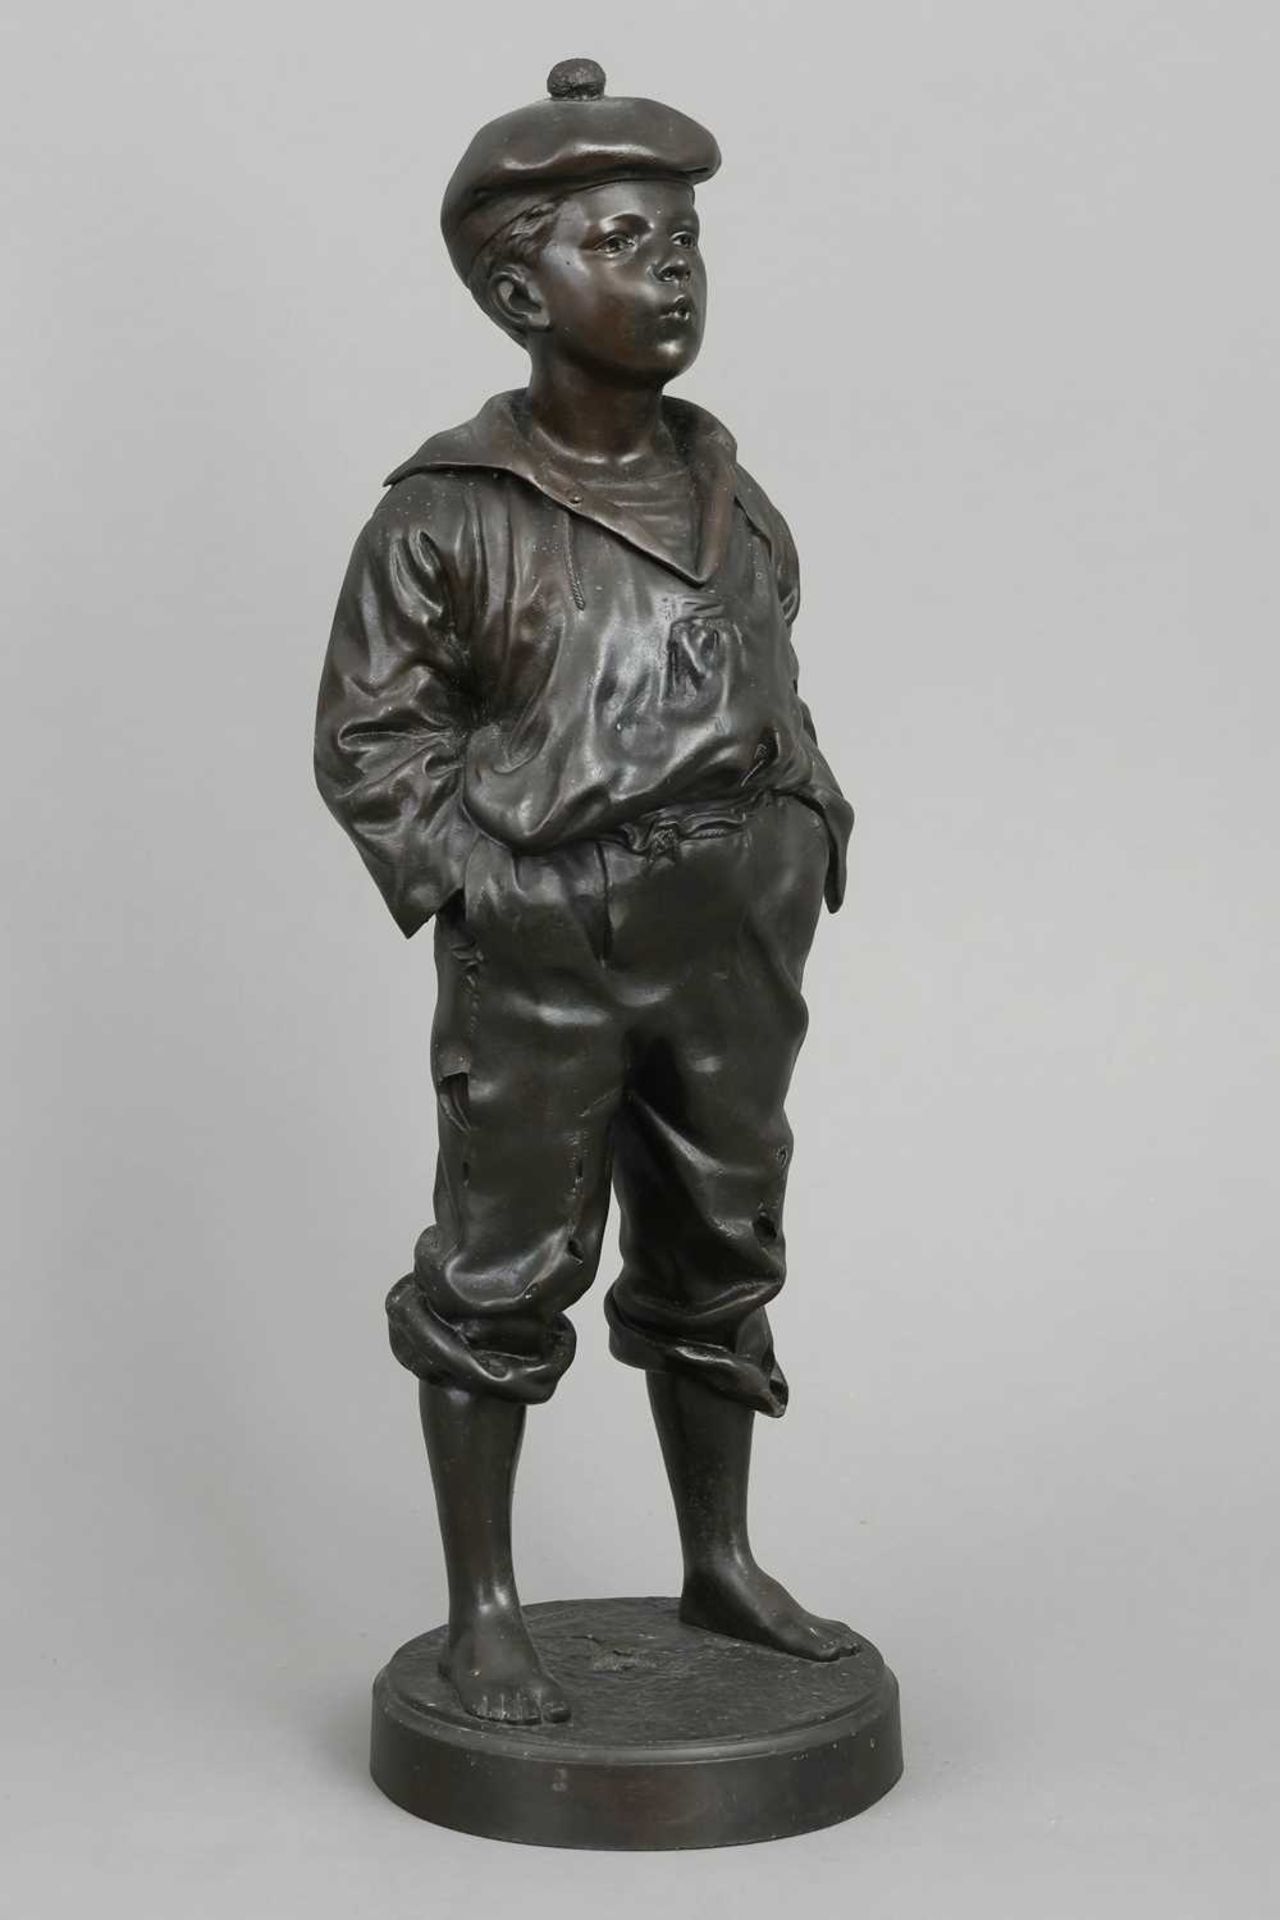 VLACLAV (Victor) SZCZEBLEWESKY (1888-1965) Bronzefigur "Mousse siffleur"